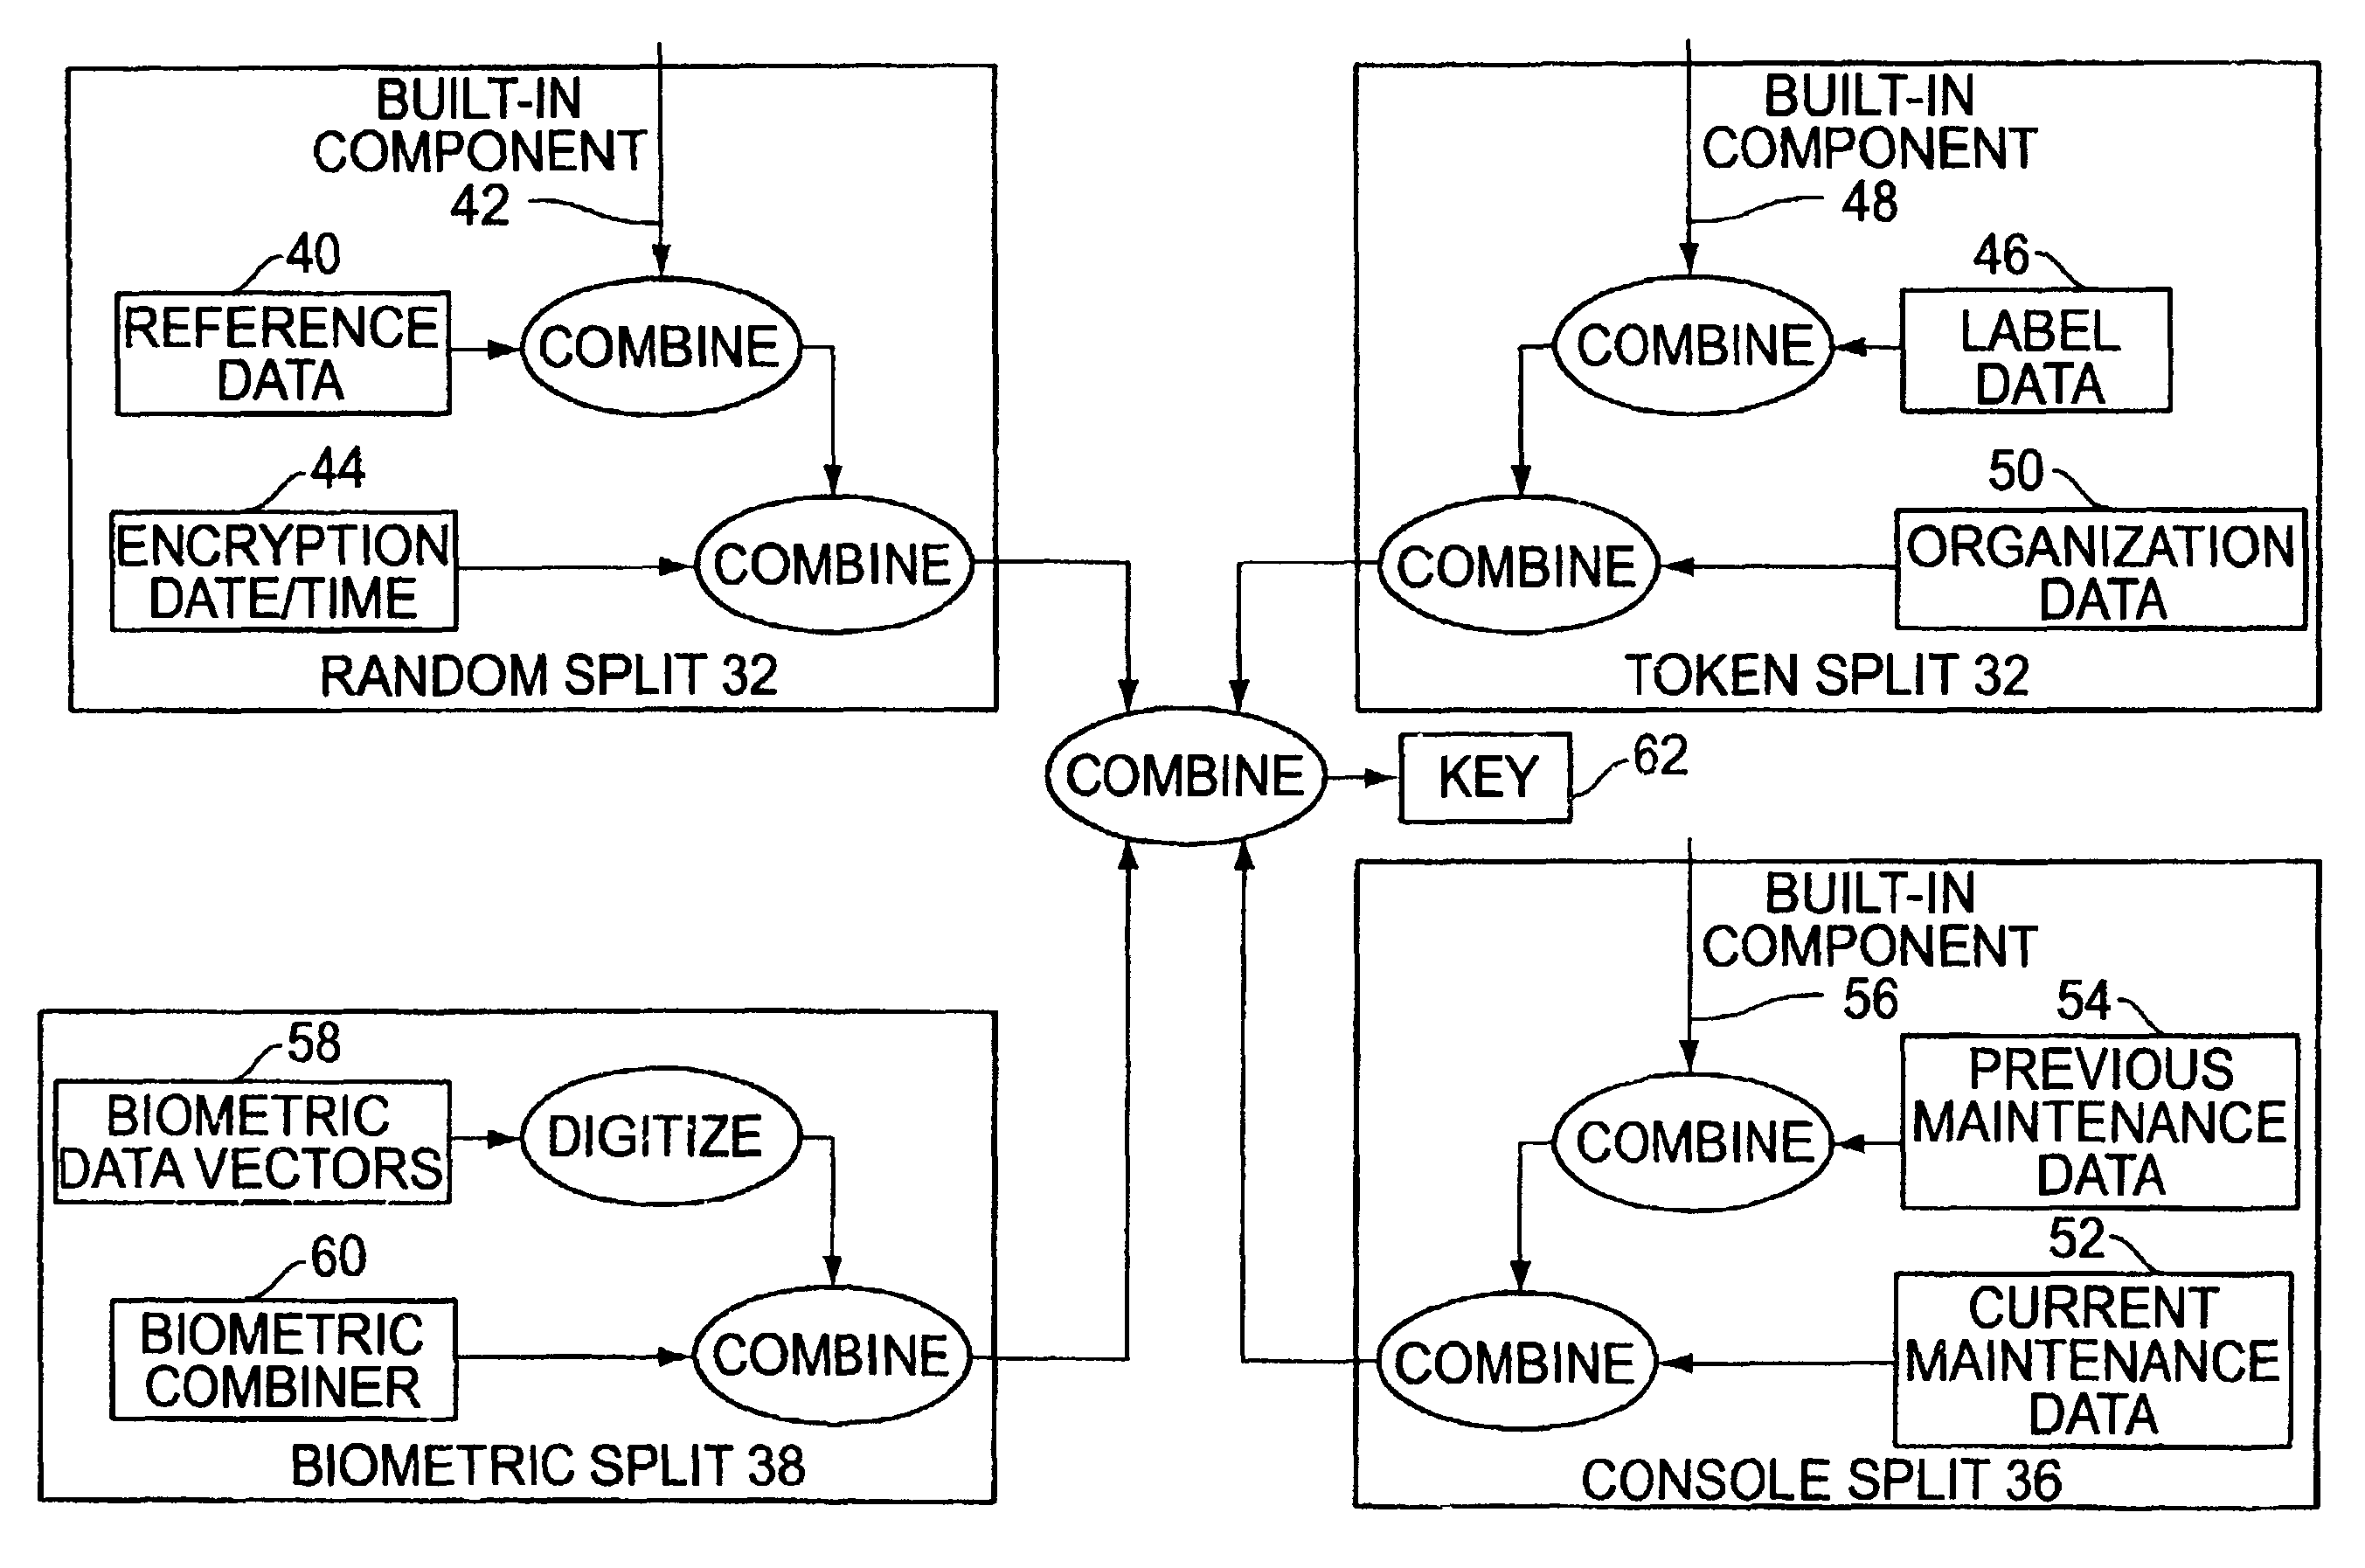 Cryptographic key split combiner